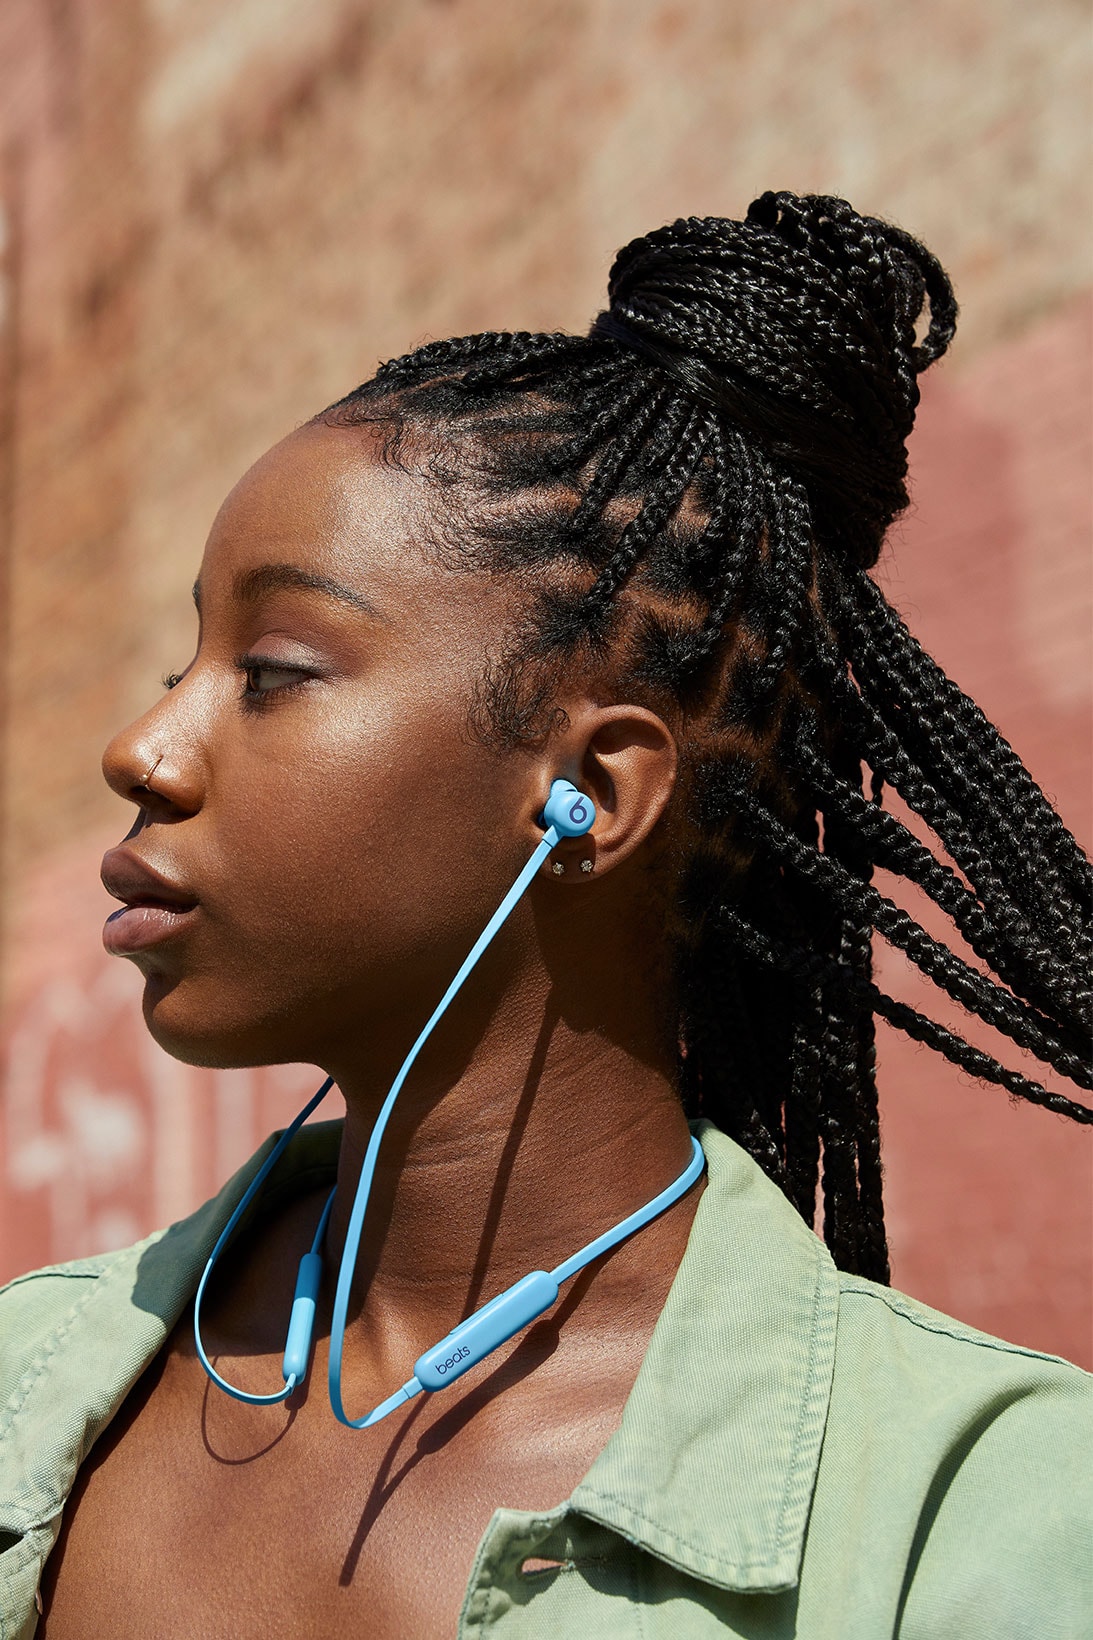 beats flex new colors flame blue wireless earphones headphones listening music brick wall